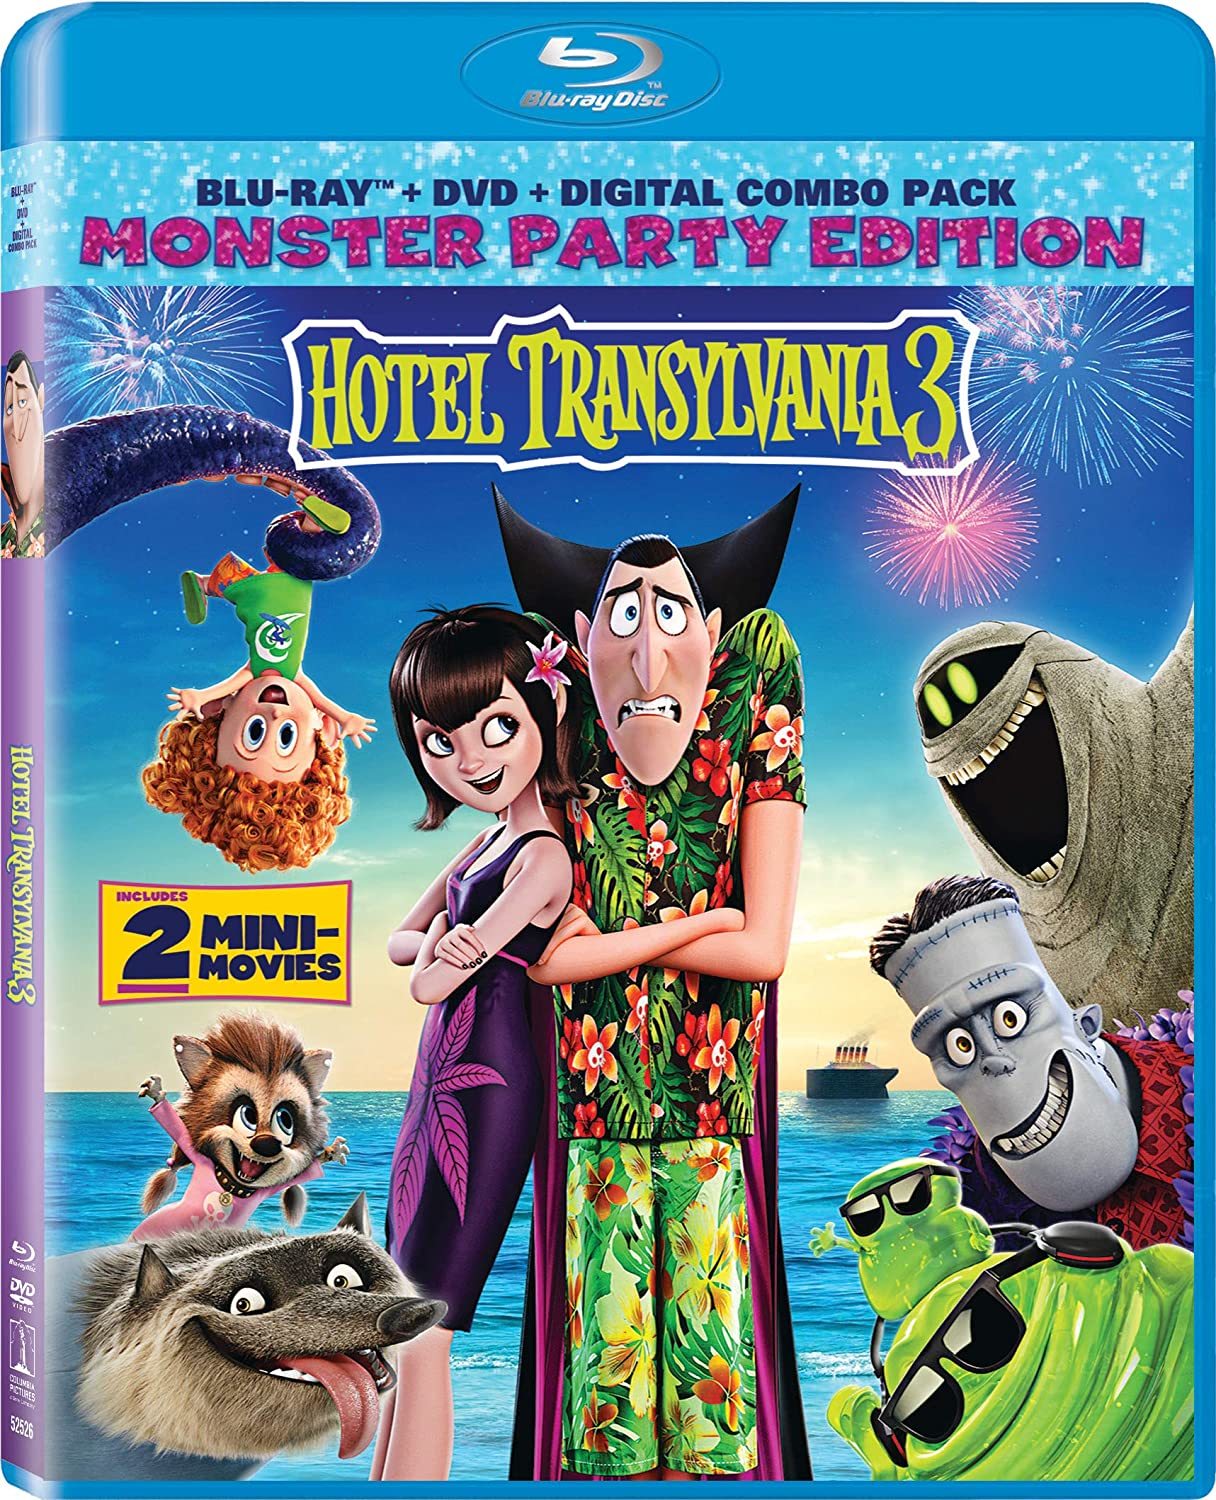 transilvania - Hotel Transylvania 3: Summer Vacation (2018) Hotel Transilvania 3: Unas Vacaciones Monstruosas (2018) [AC3 5.1 + SUP] [Blu Ray-Rip] 209940_front